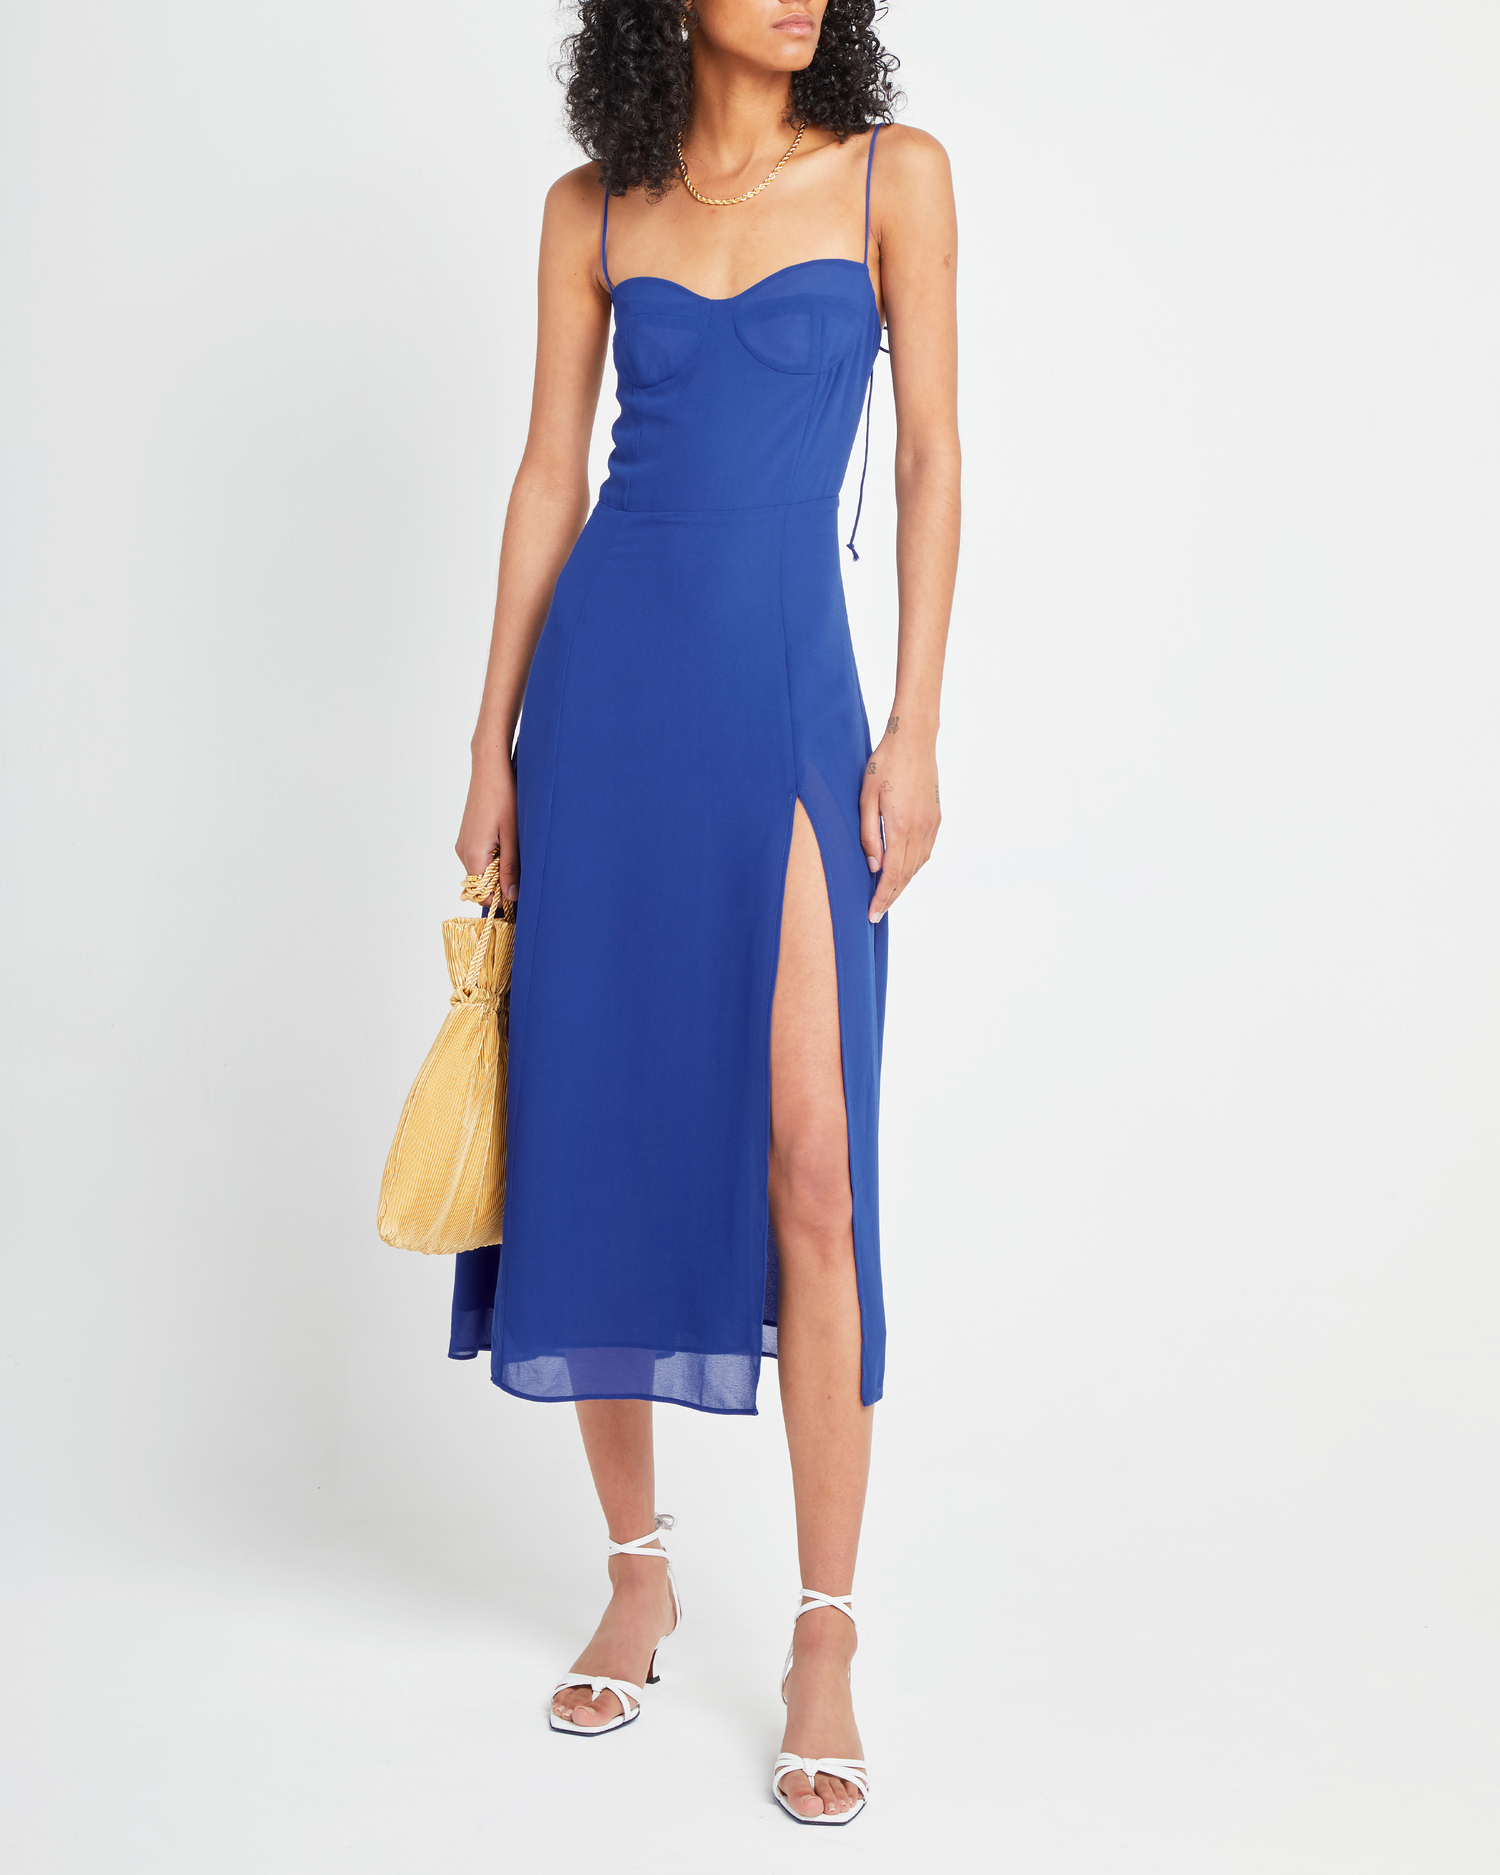 First image of Venus Dress, a blue midi dress, tie straps, spaghetti straps, side slit, bodice